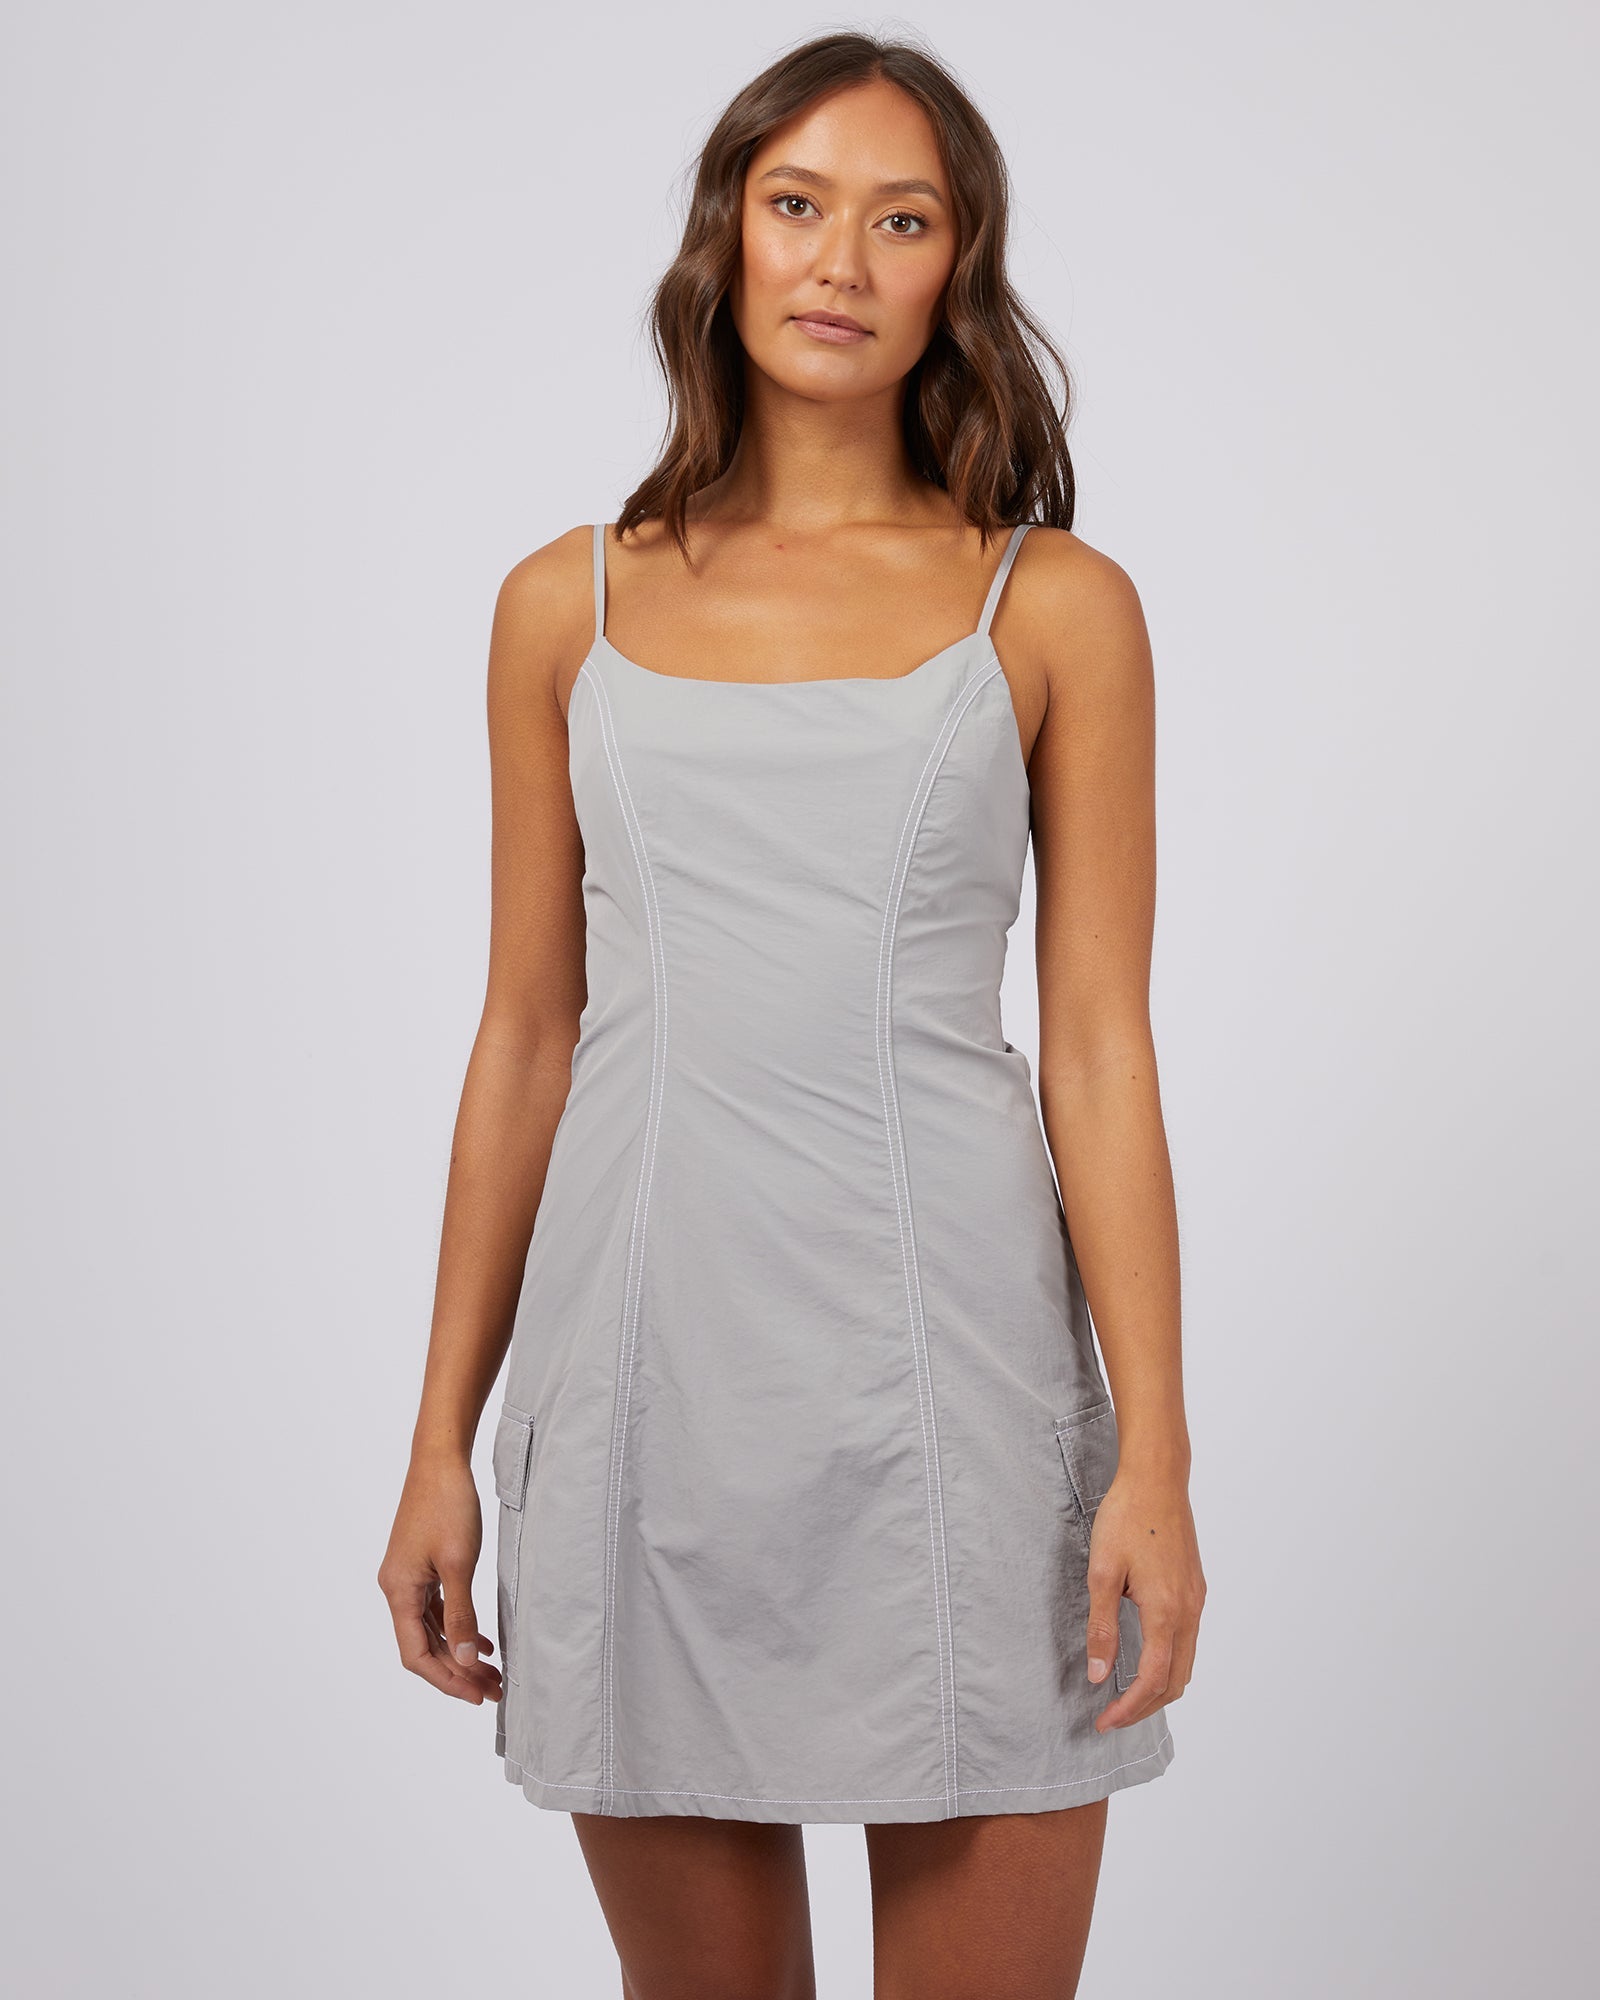 Ace Contrast Mini Dress Grey, Buy Online